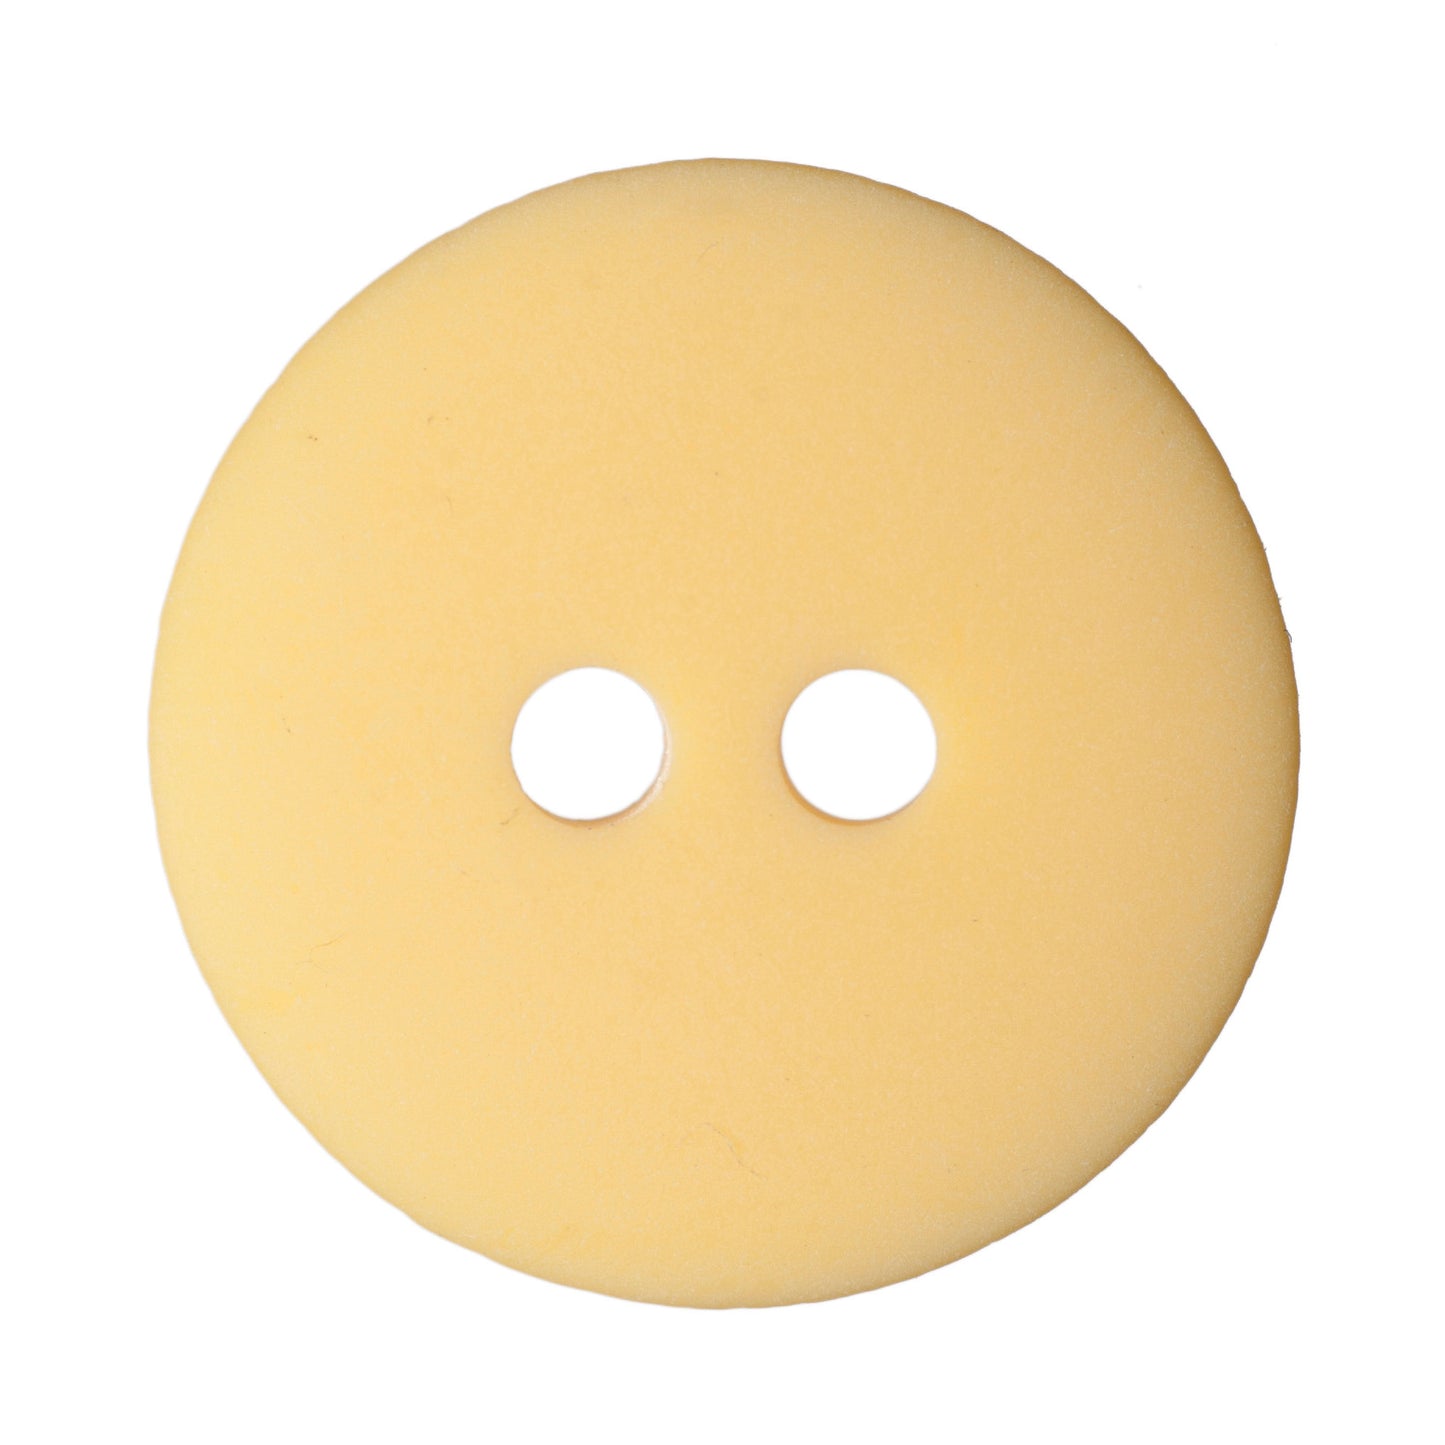 2 Hole Round Matt Button - 18mm - Yellow [LB29.2]